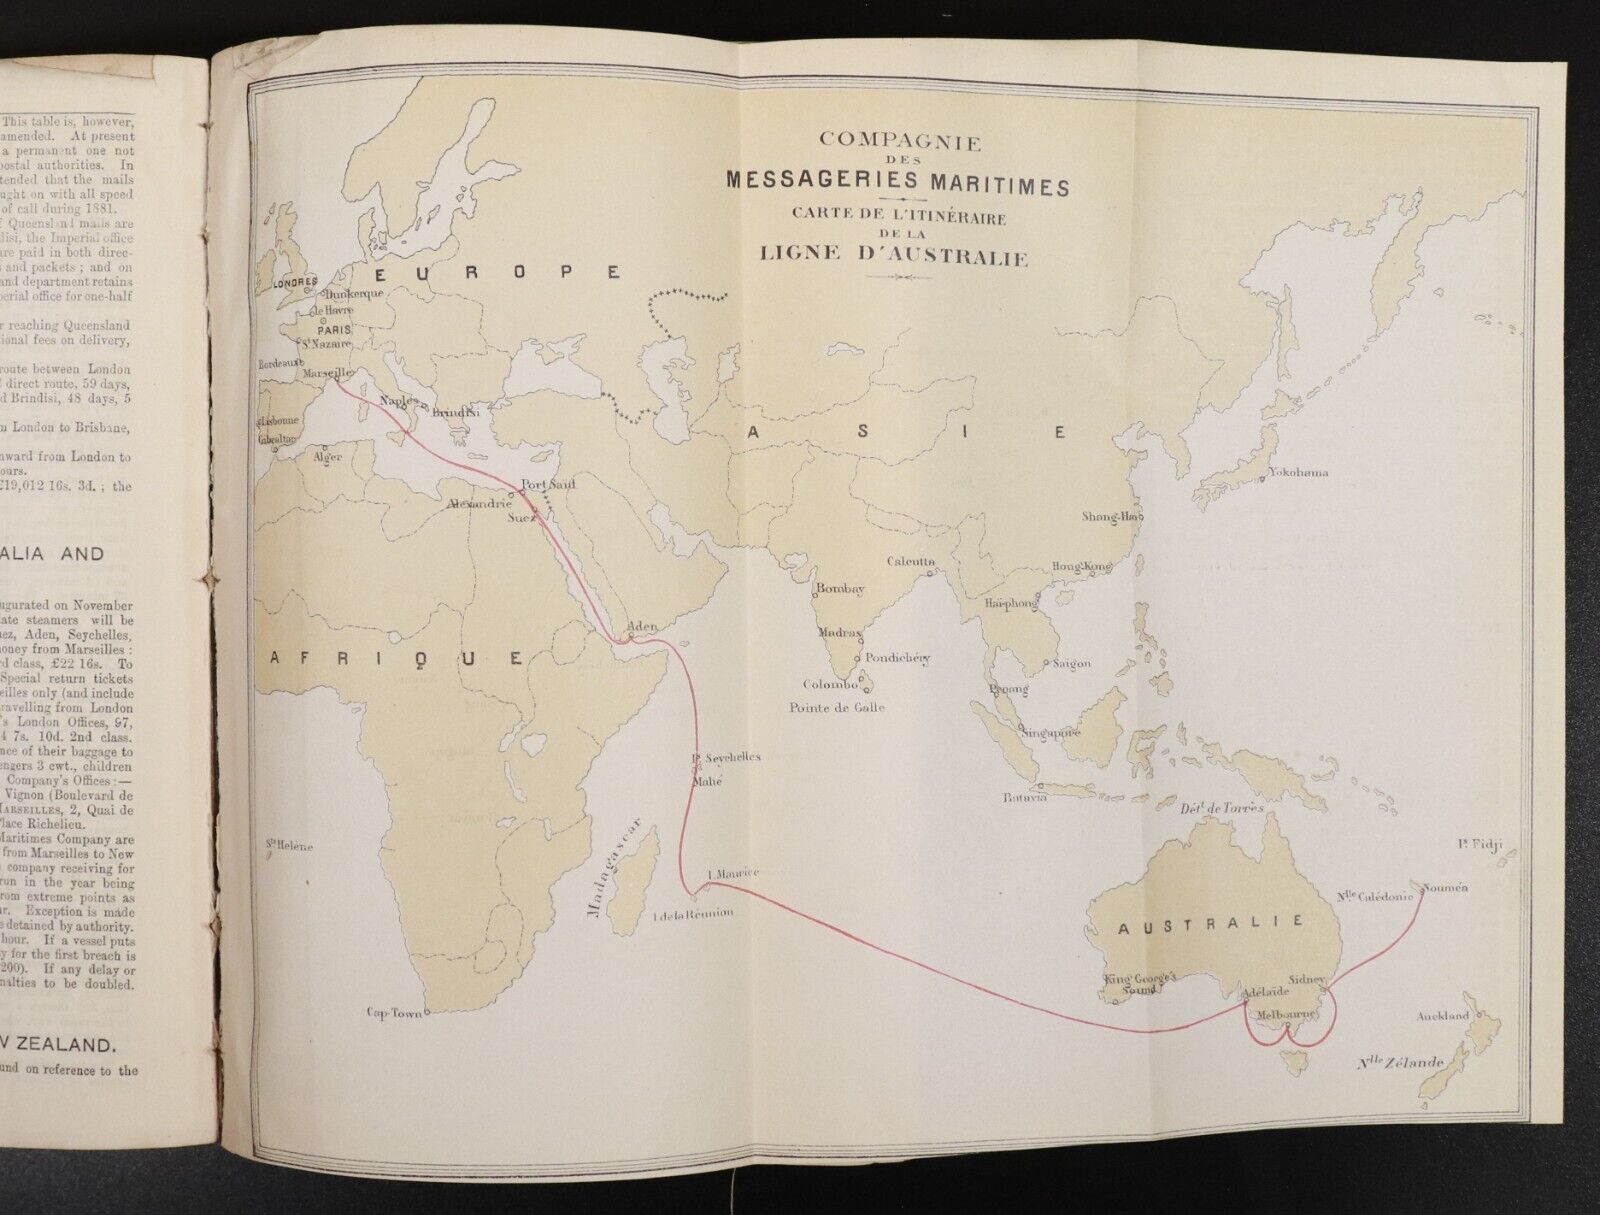 1883 Australian Handbook Directory Business Guide Antiquarian Reference Book